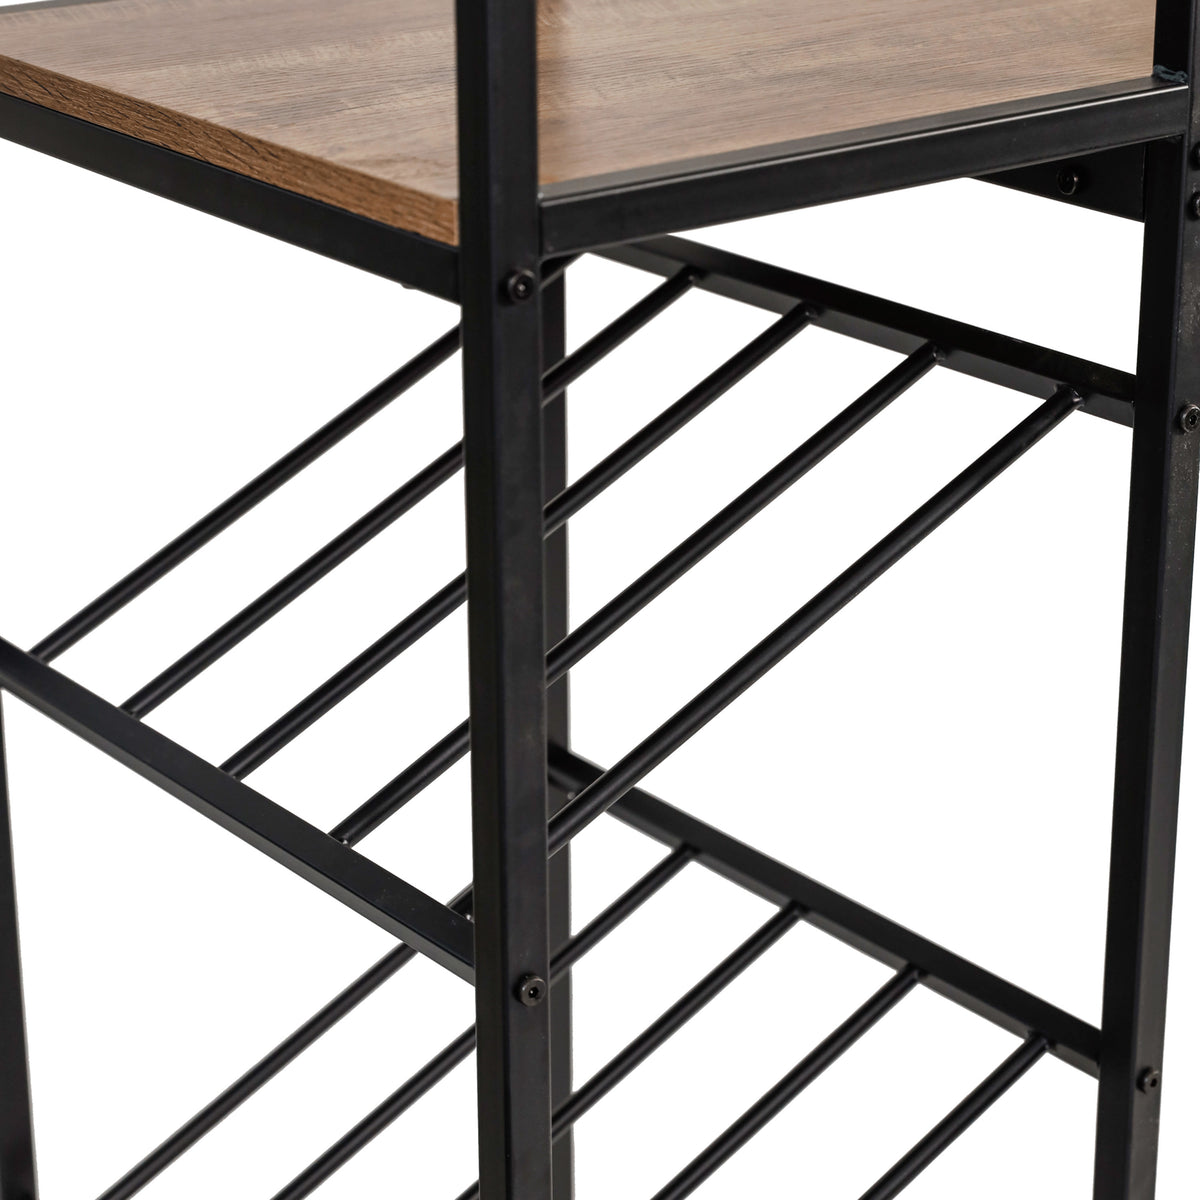 Light Brown Top/Black Frame |#| Modern Metal Bar Table with Bottle and Stemware Storage - Black/Light Brown